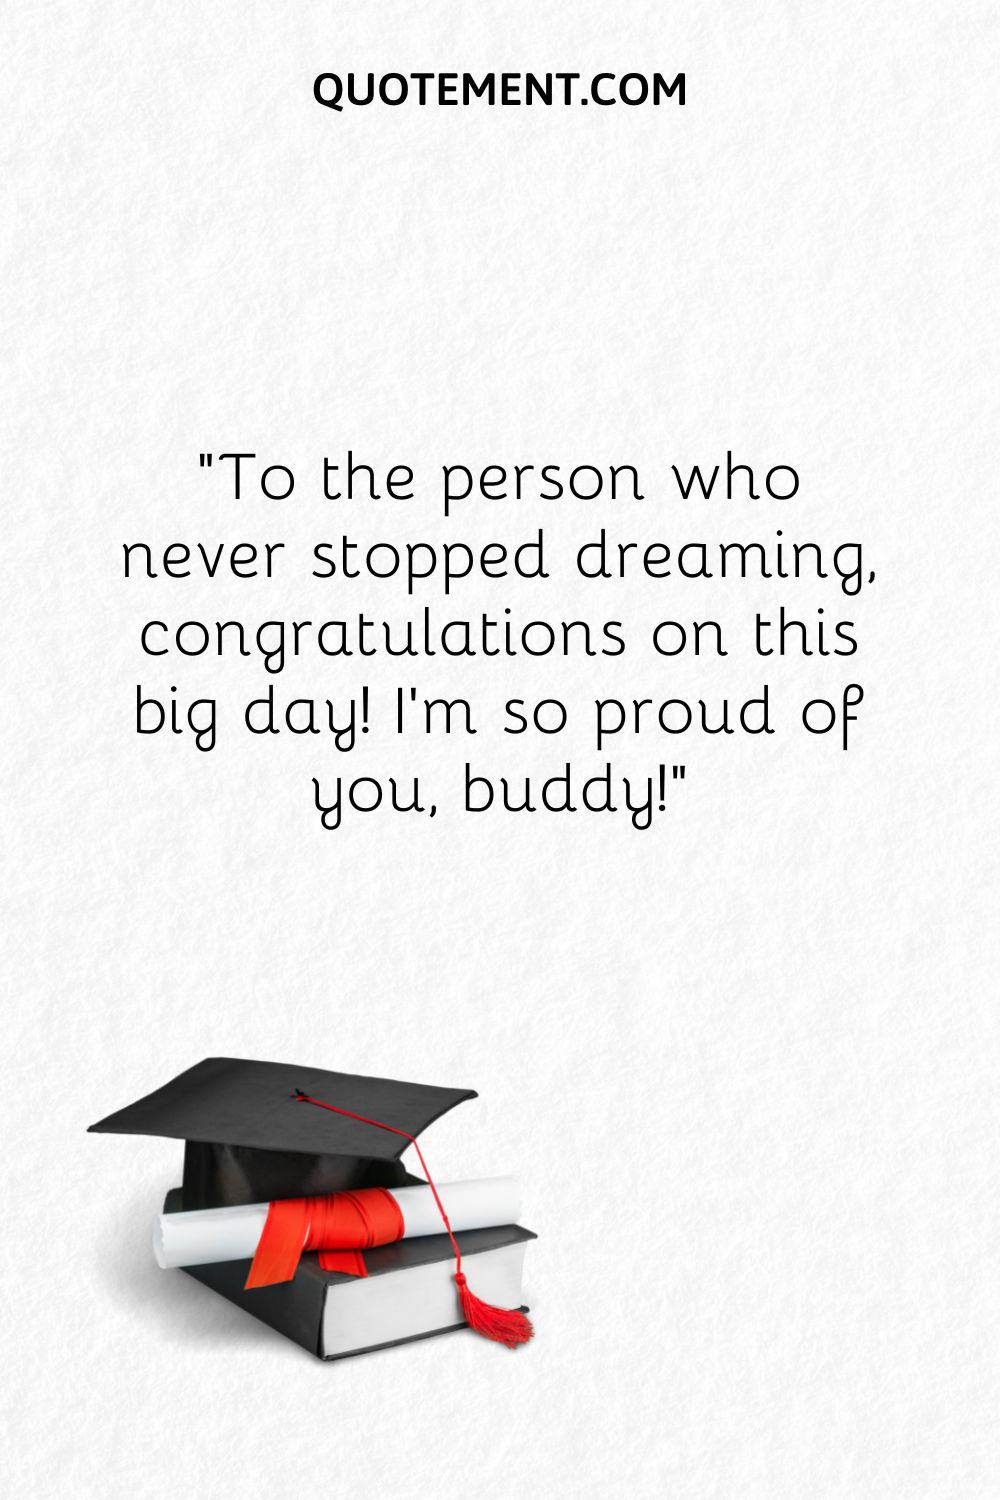 Inspirational congrats grad wish, graduation hat, diploma and book.